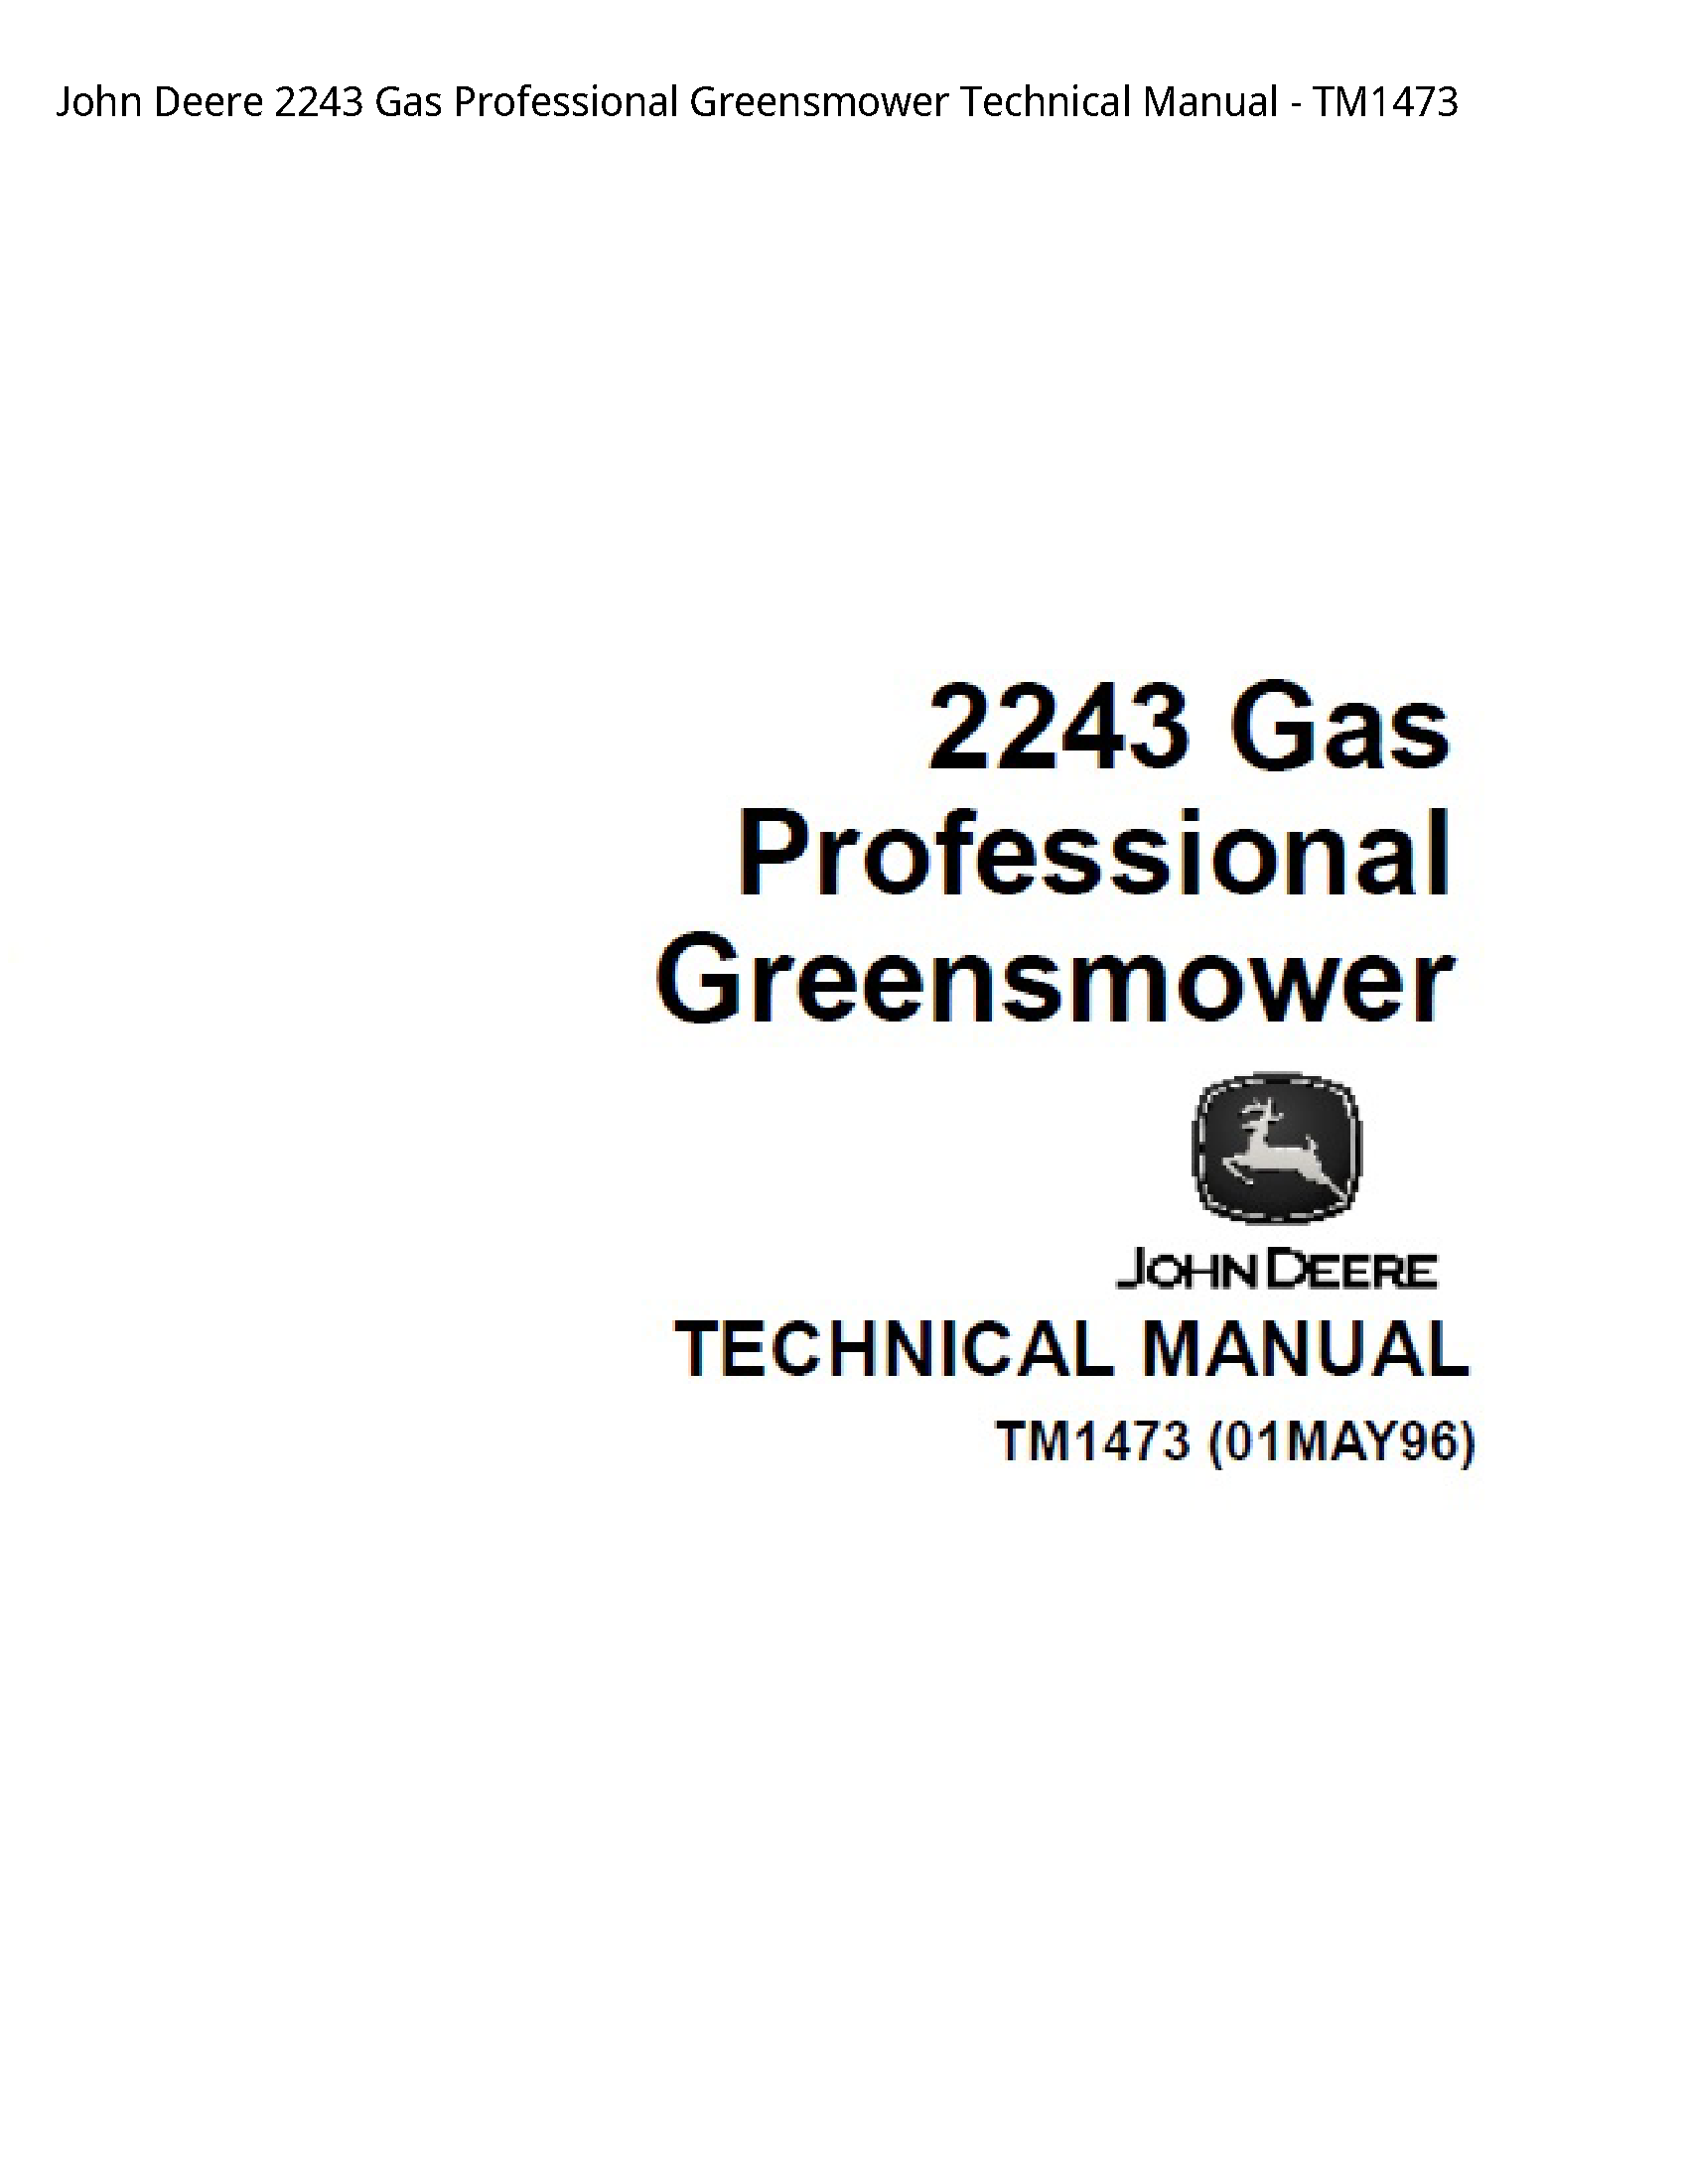 John Deere 2243 Gas Professional Greensmower Technical manual